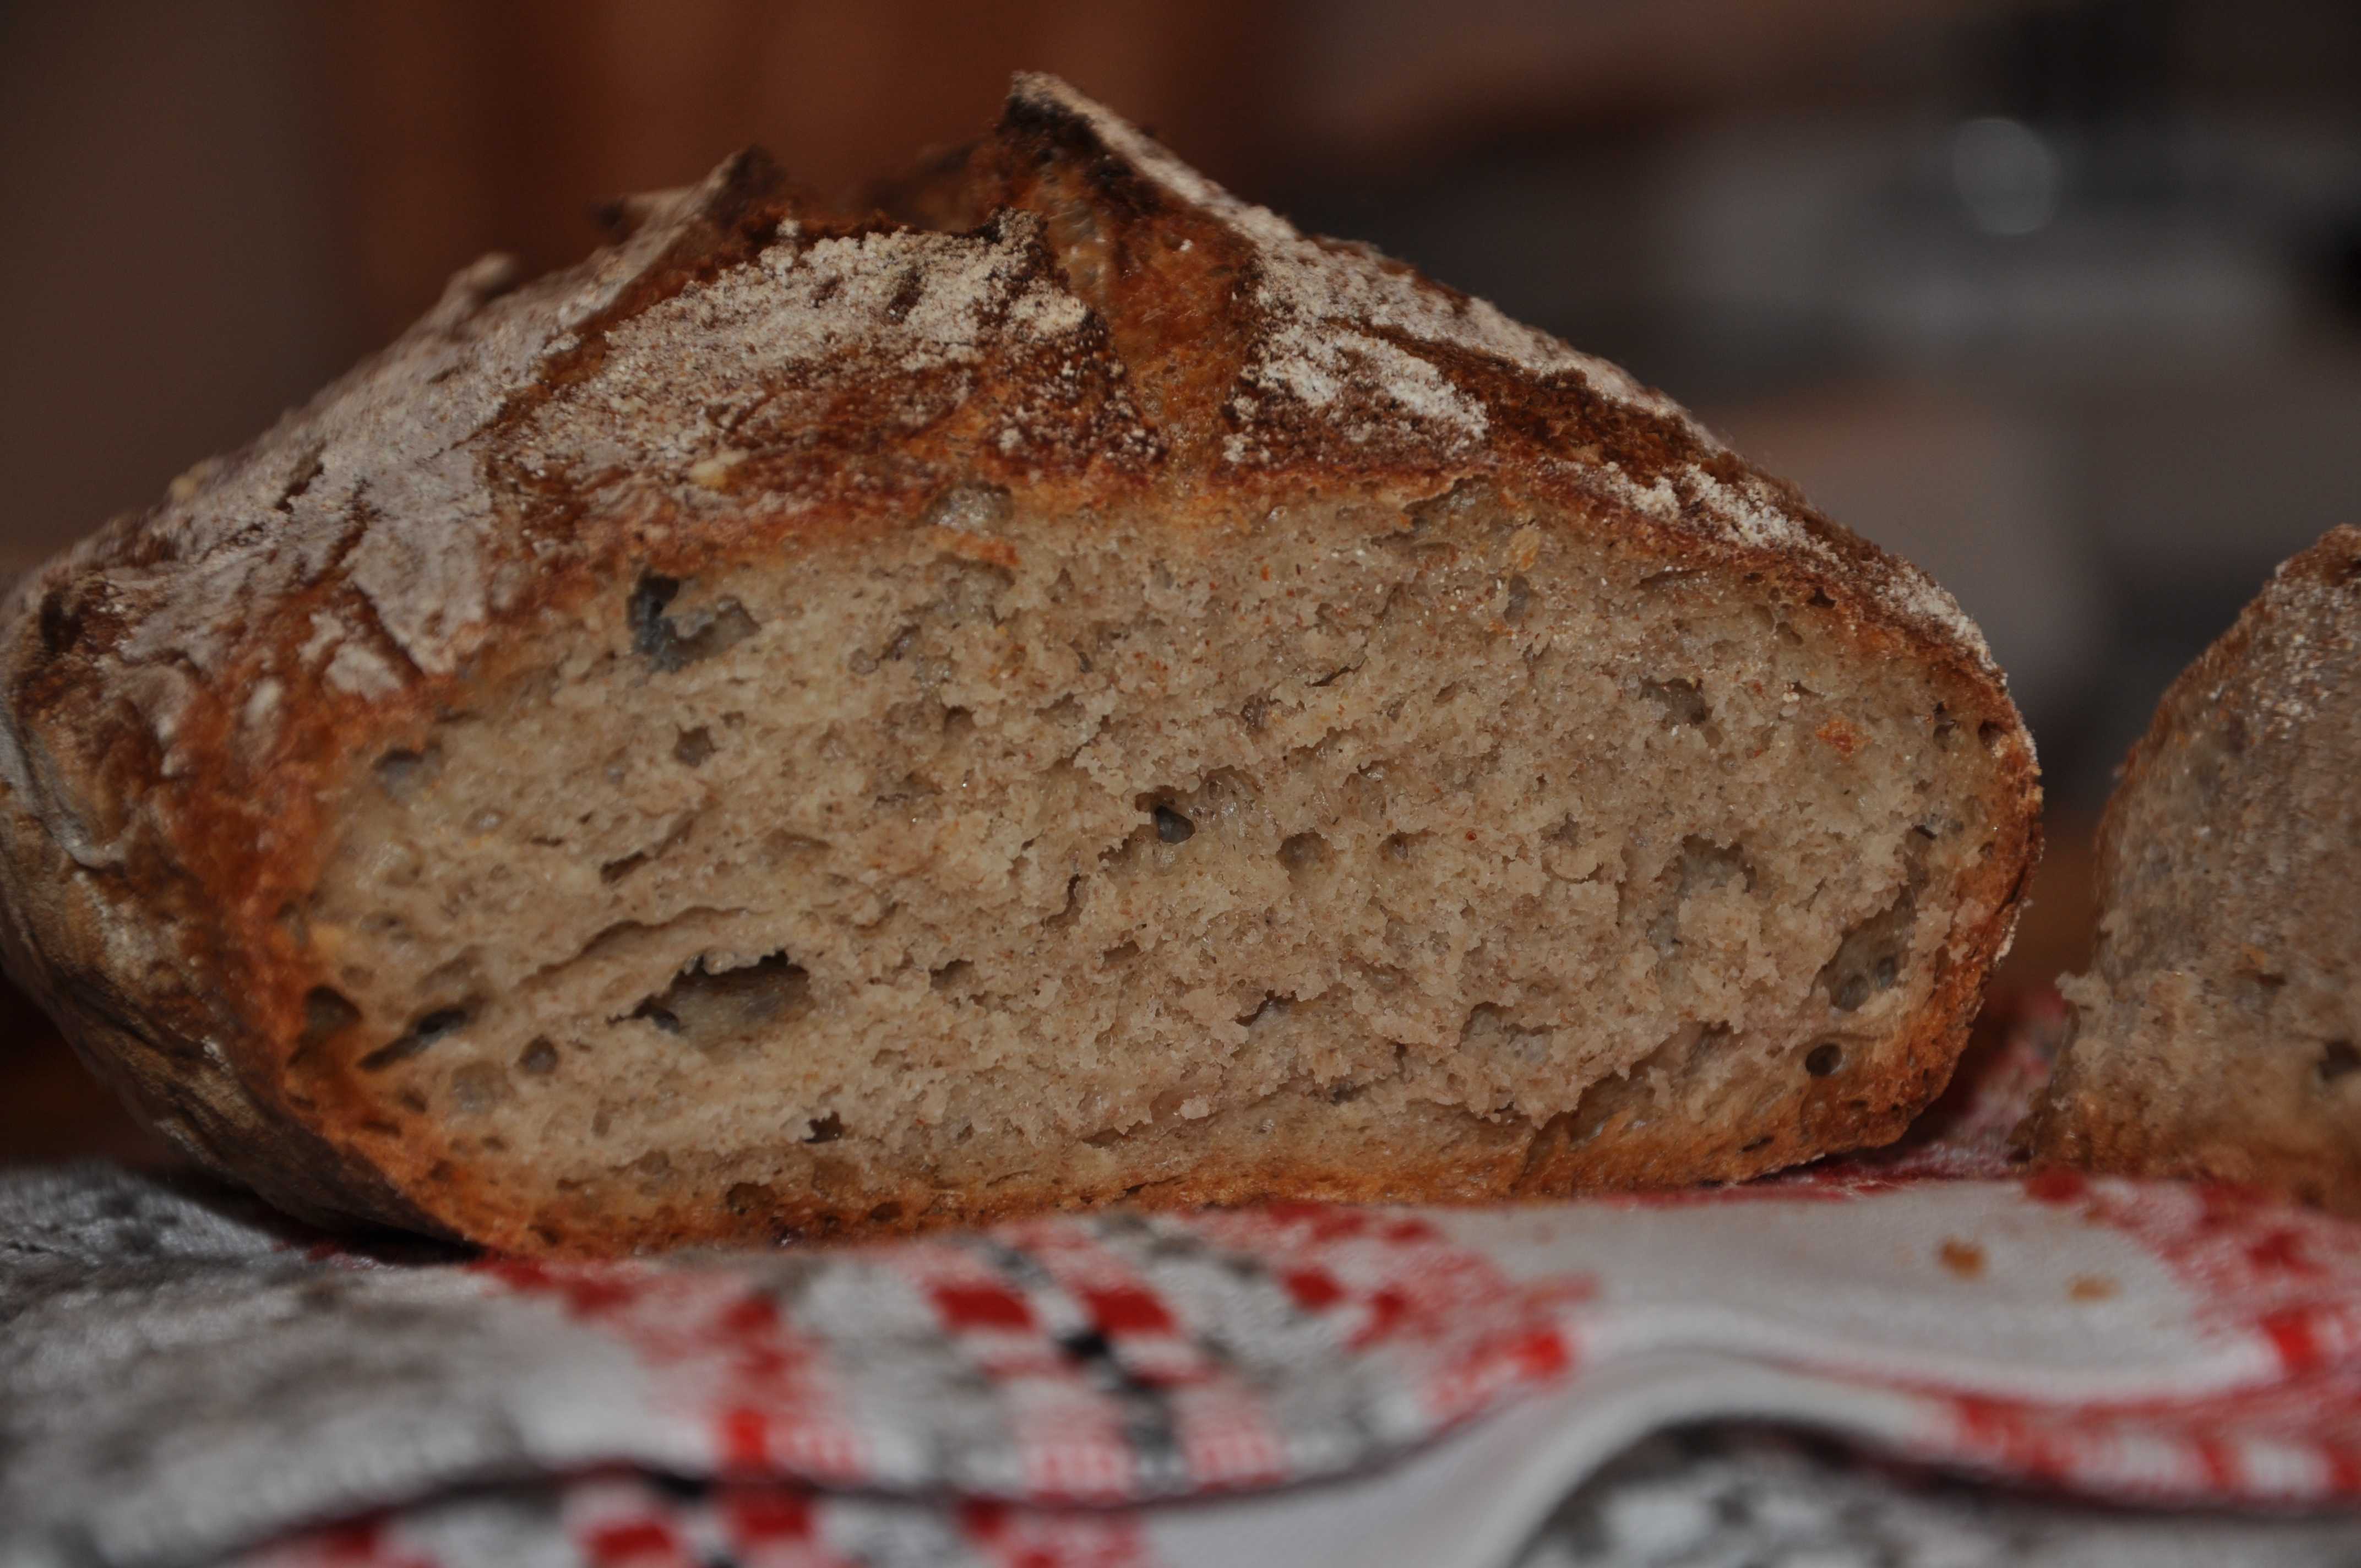 Рецепт безглютенового хлеба в духовке в домашних условиях без дрожжей с фото